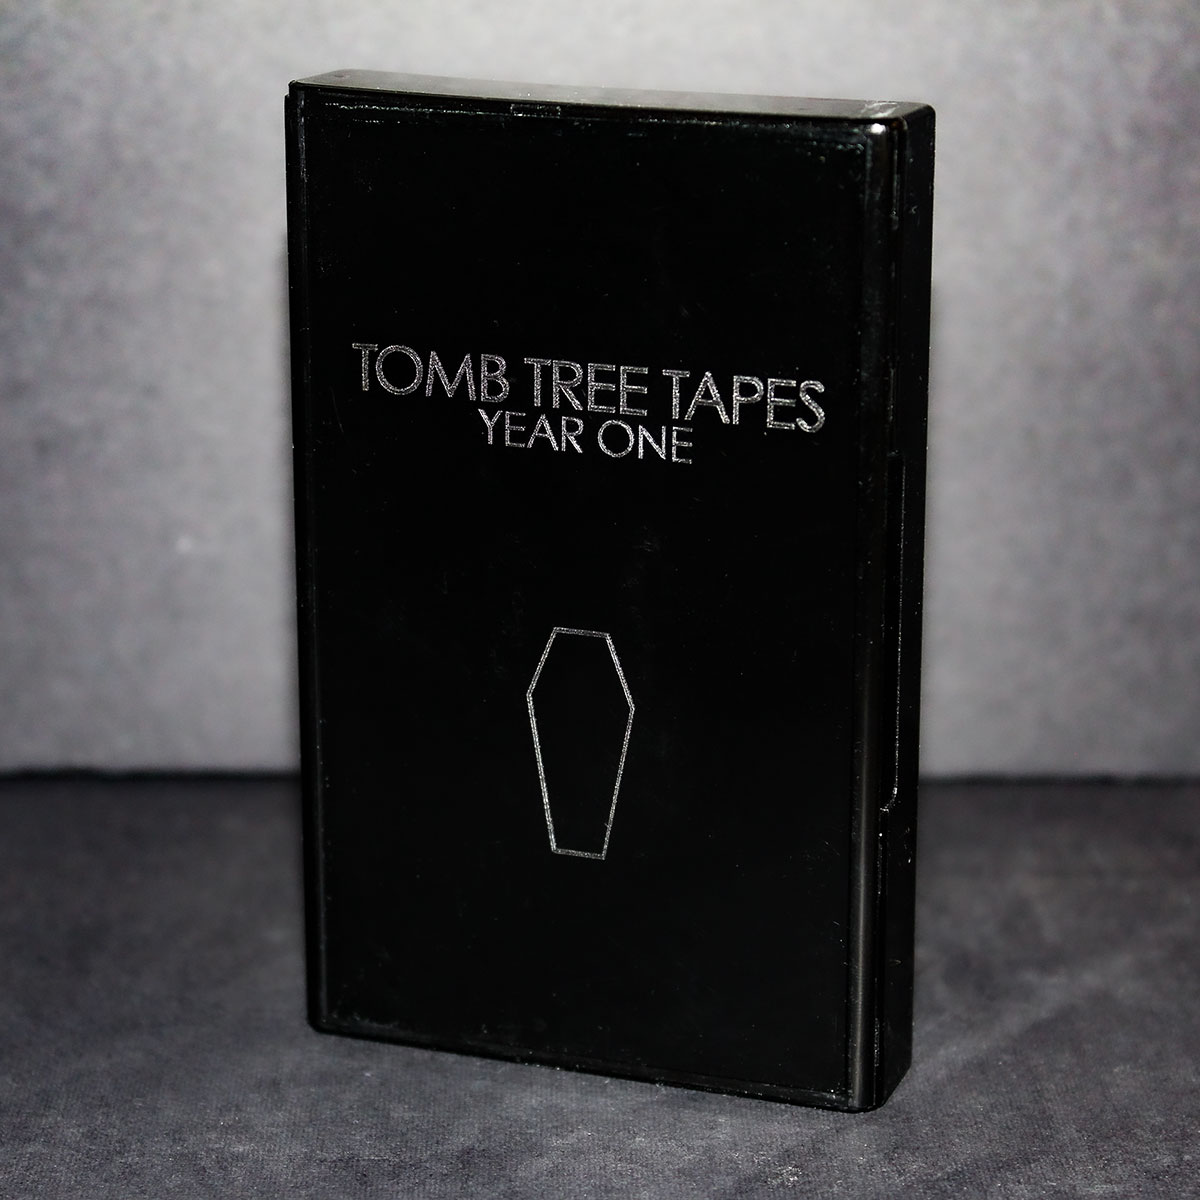 Tomb Tree Tapes w/ laser engraving on black cassette case